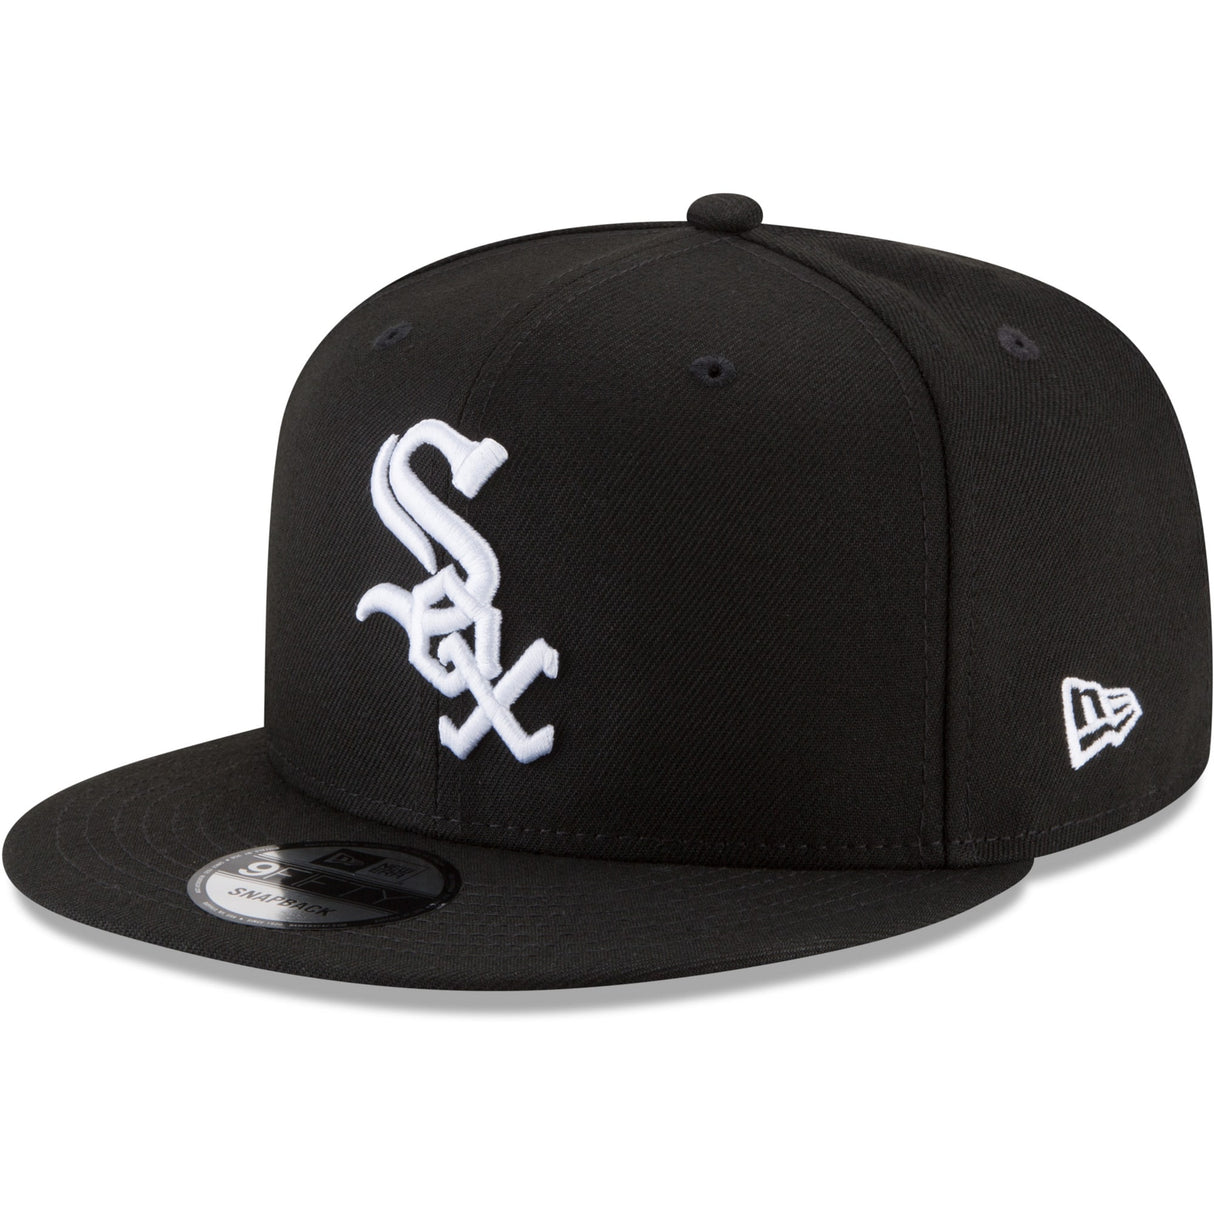 New Era Chicago White Sox 9Fifty Black & White Snapback Hat